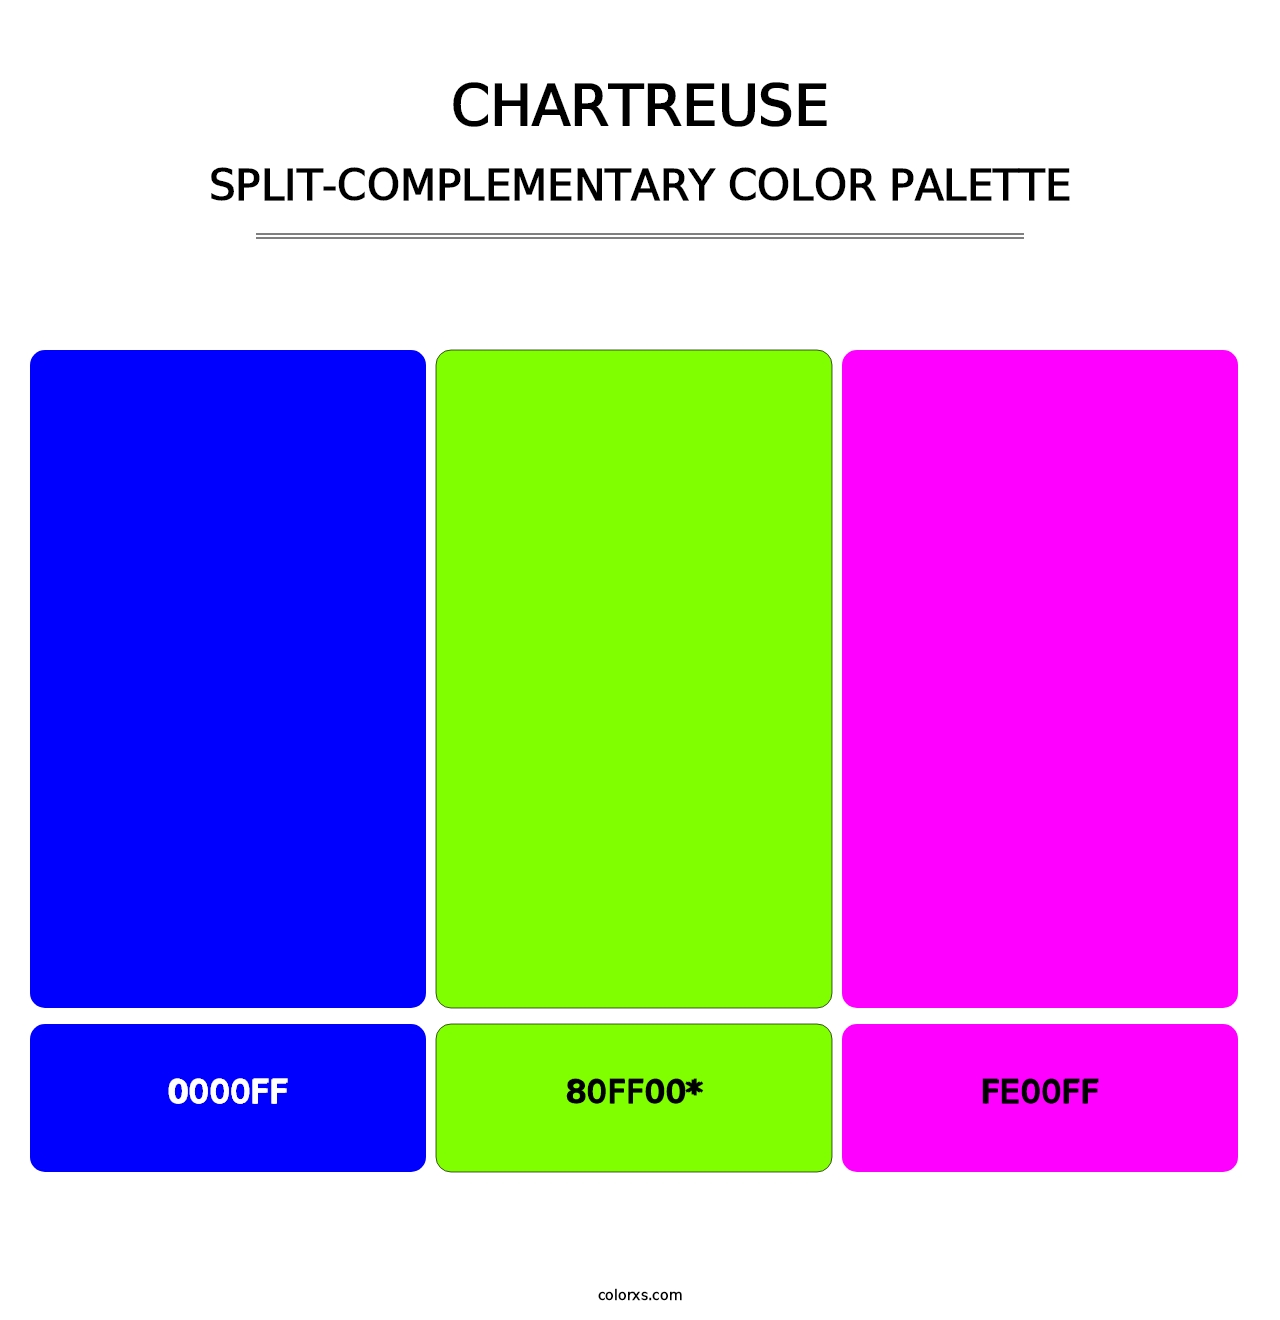 Chartreuse - Split-Complementary Color Palette